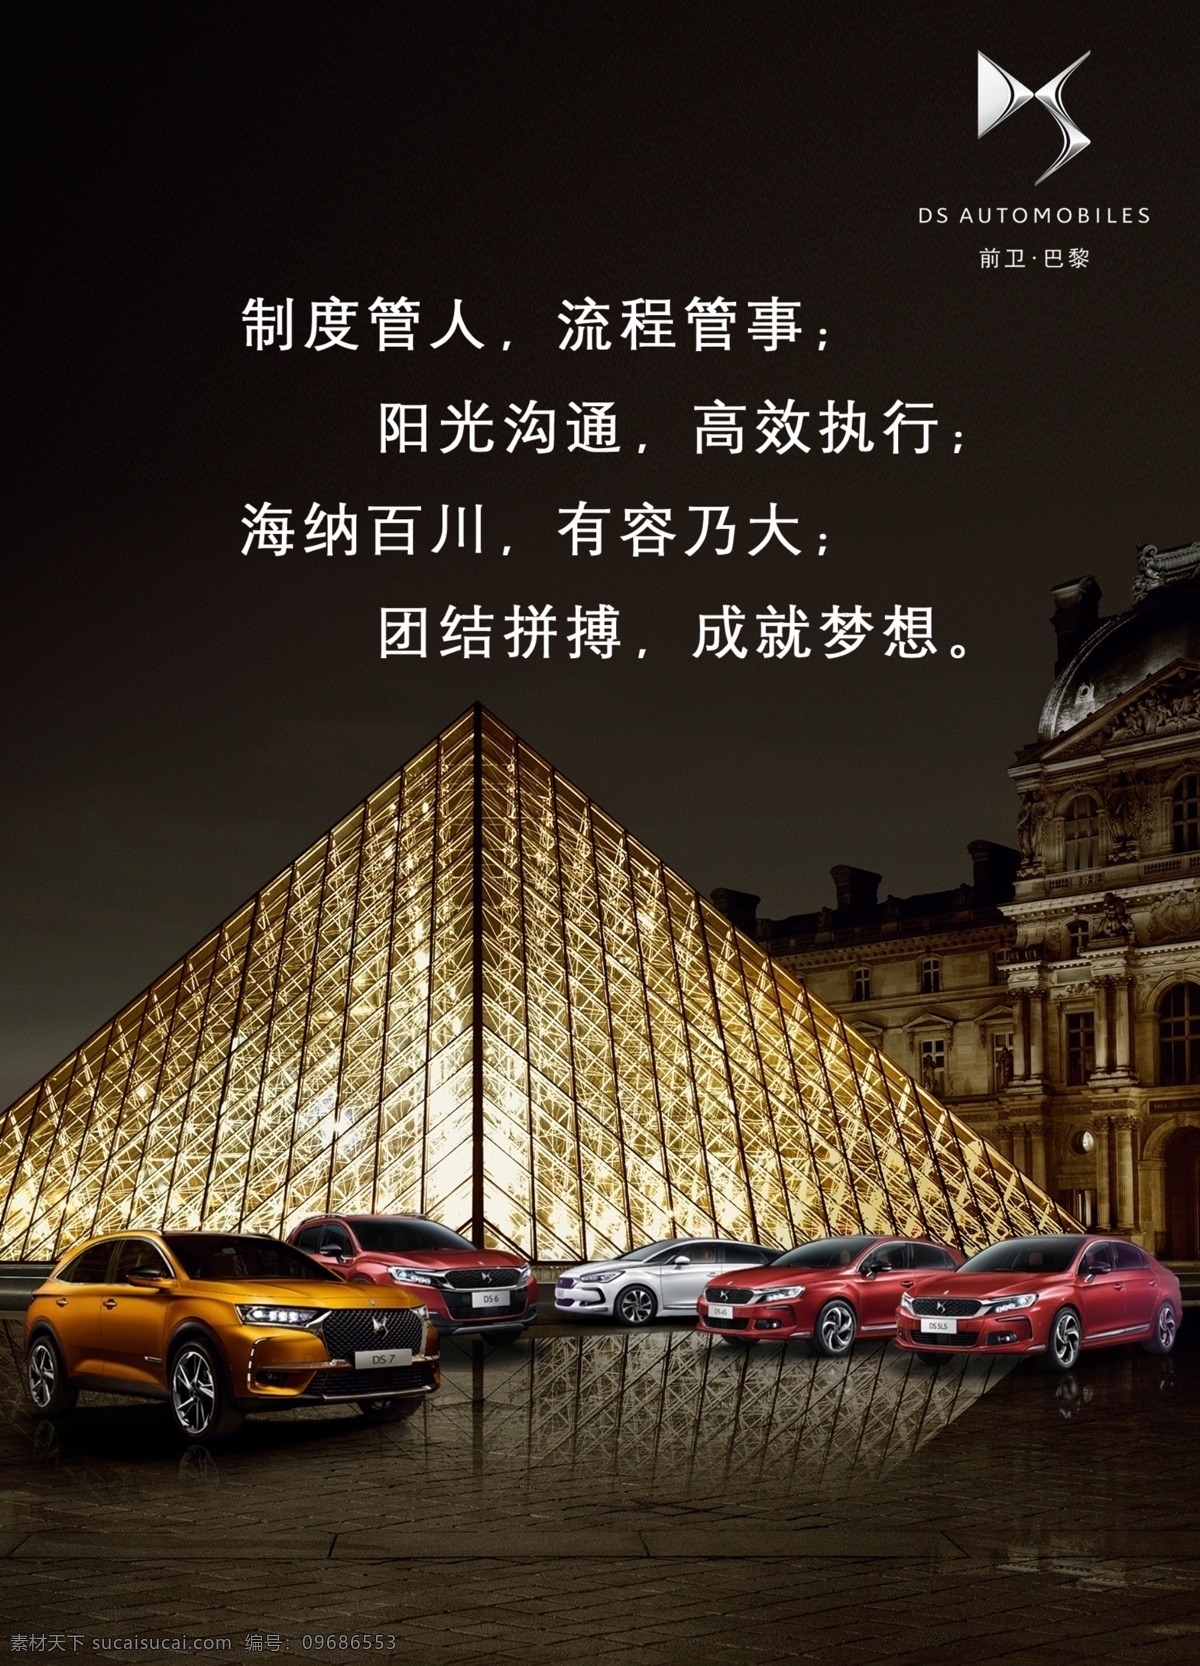 ds汽车 ds全系车 dslogo 巴黎金字塔 玻璃金字塔 分层素材 企业文化 广告 平面 分层